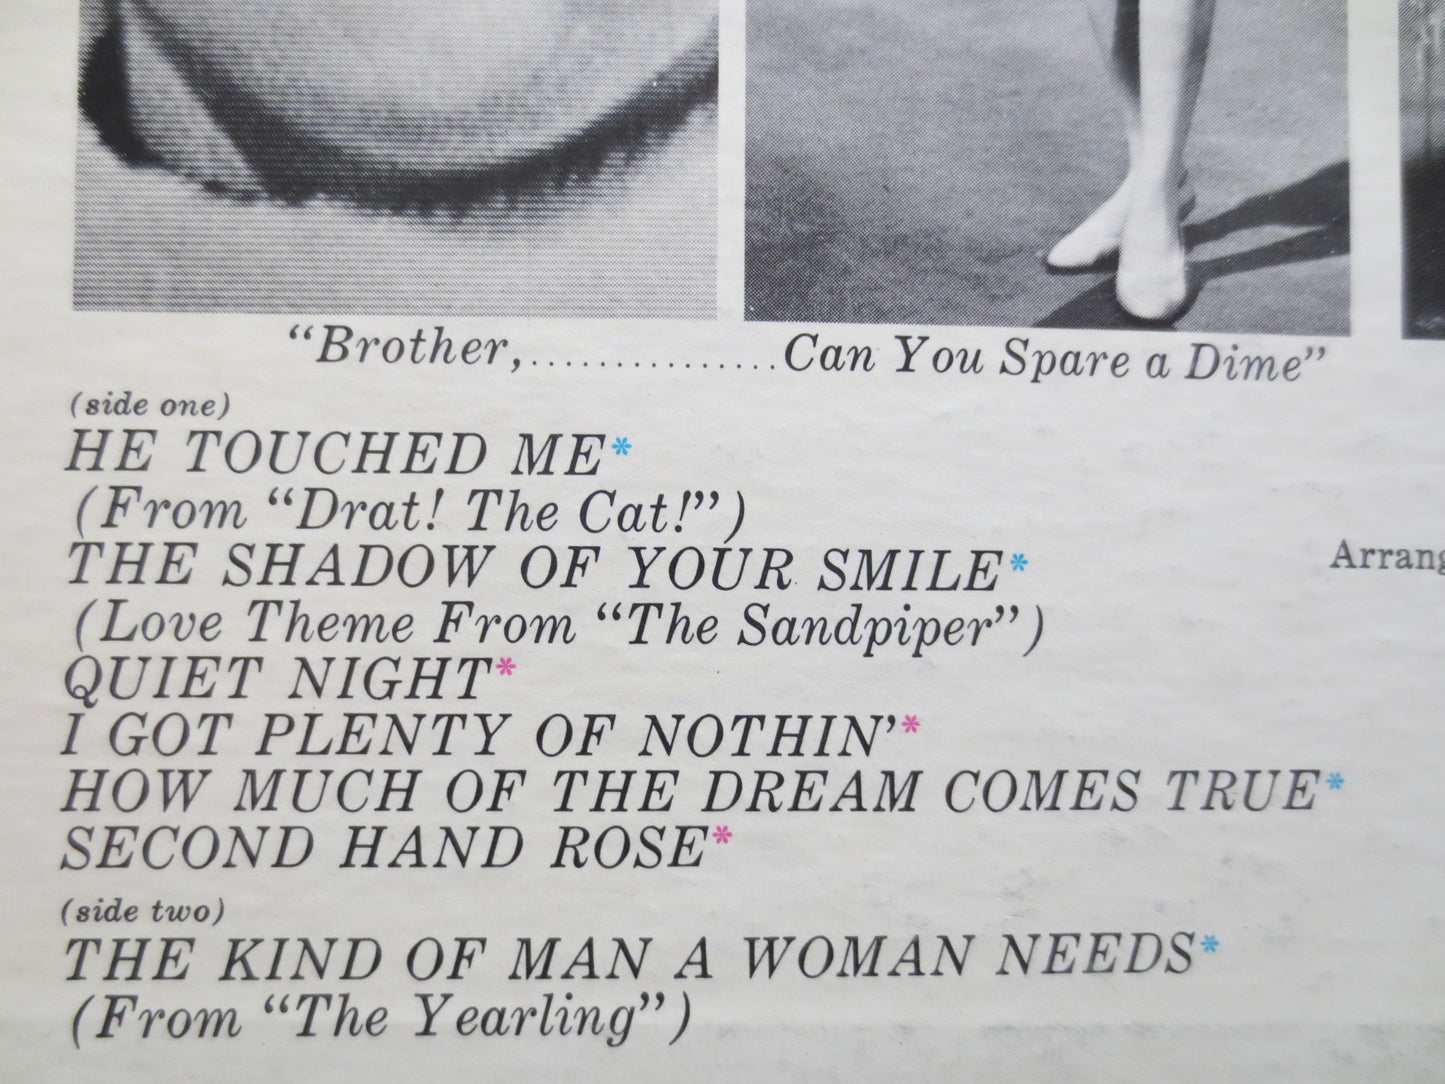 BARBRA STREISAND, My Name is BARBRA, Barbra Streisand Lp, Vinyl Record, Vinyl Lp, Pop Record, Pop Music Album, 1965 Records